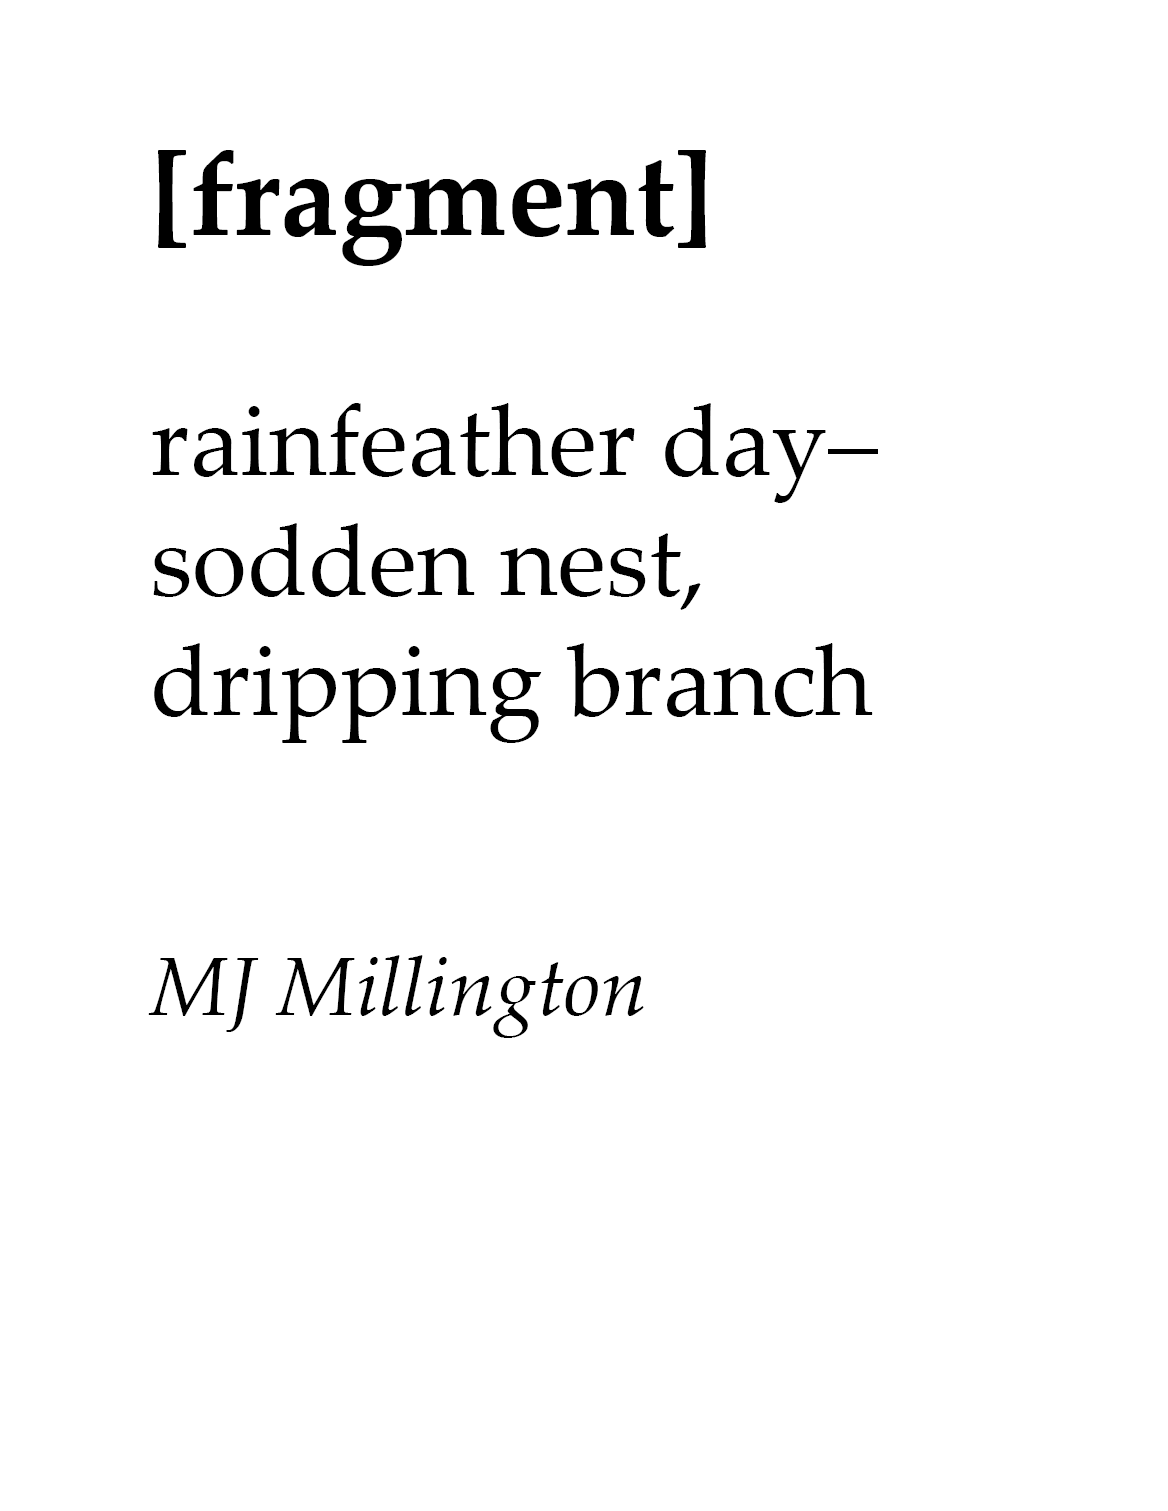 Ostrakon poem fragments7.png